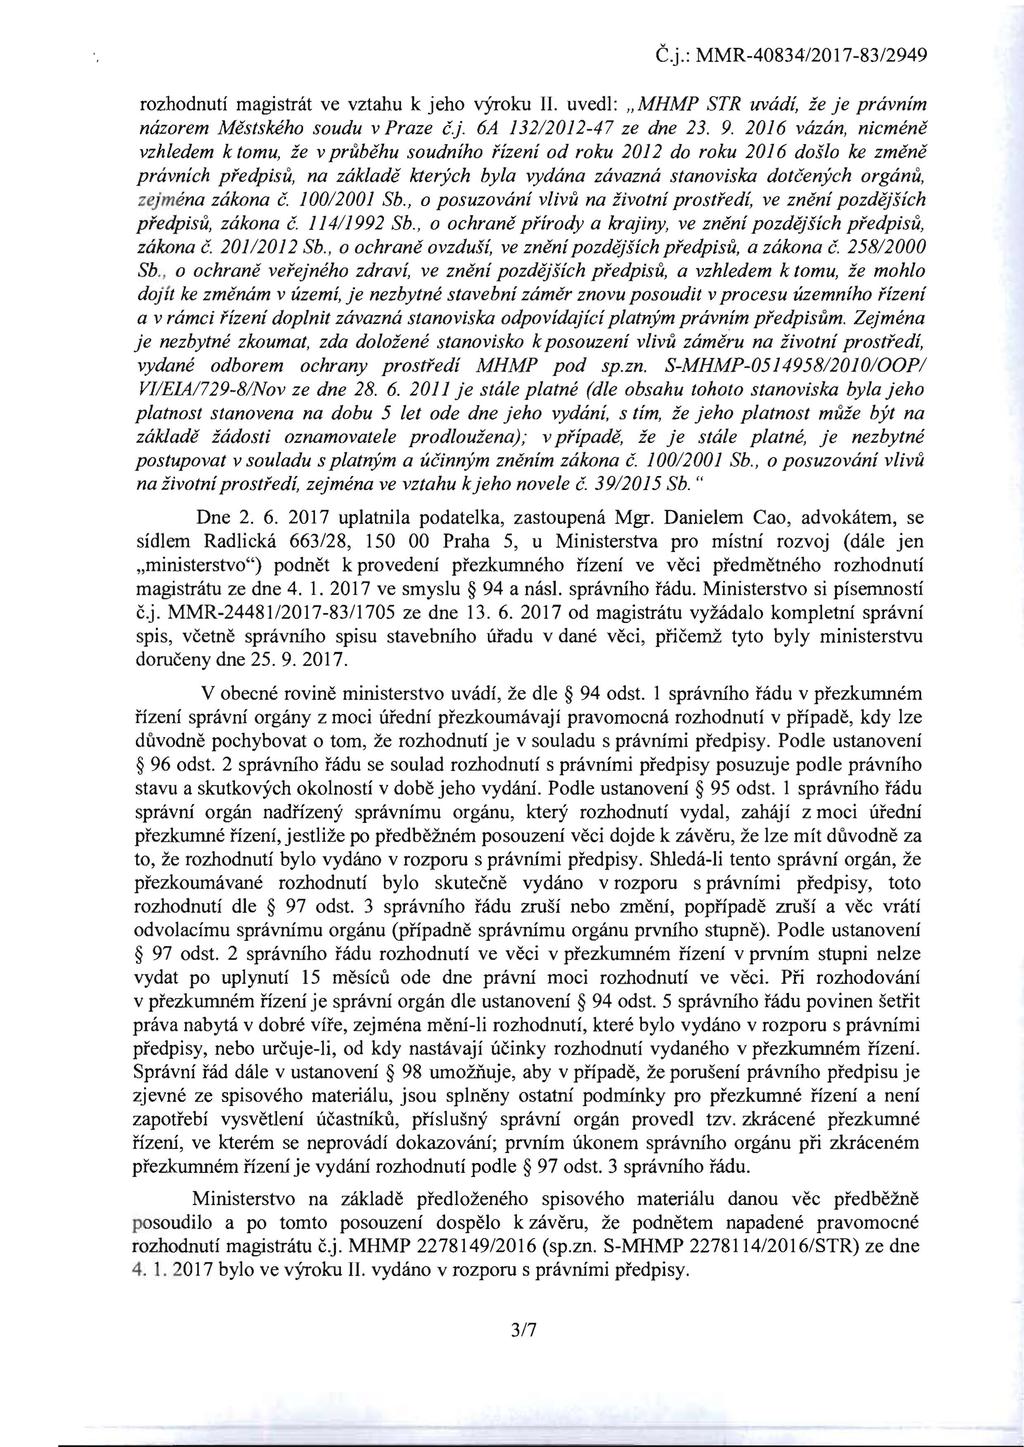 rozhodnuti magistnit ve vztahu k jeho vyroku II. uvedl: "MHMP STR uvadi, ie je pravnim nazorem Mestskeho soudu v Praze c.j. 6A 132/2012-47 ze dne 23. 9.